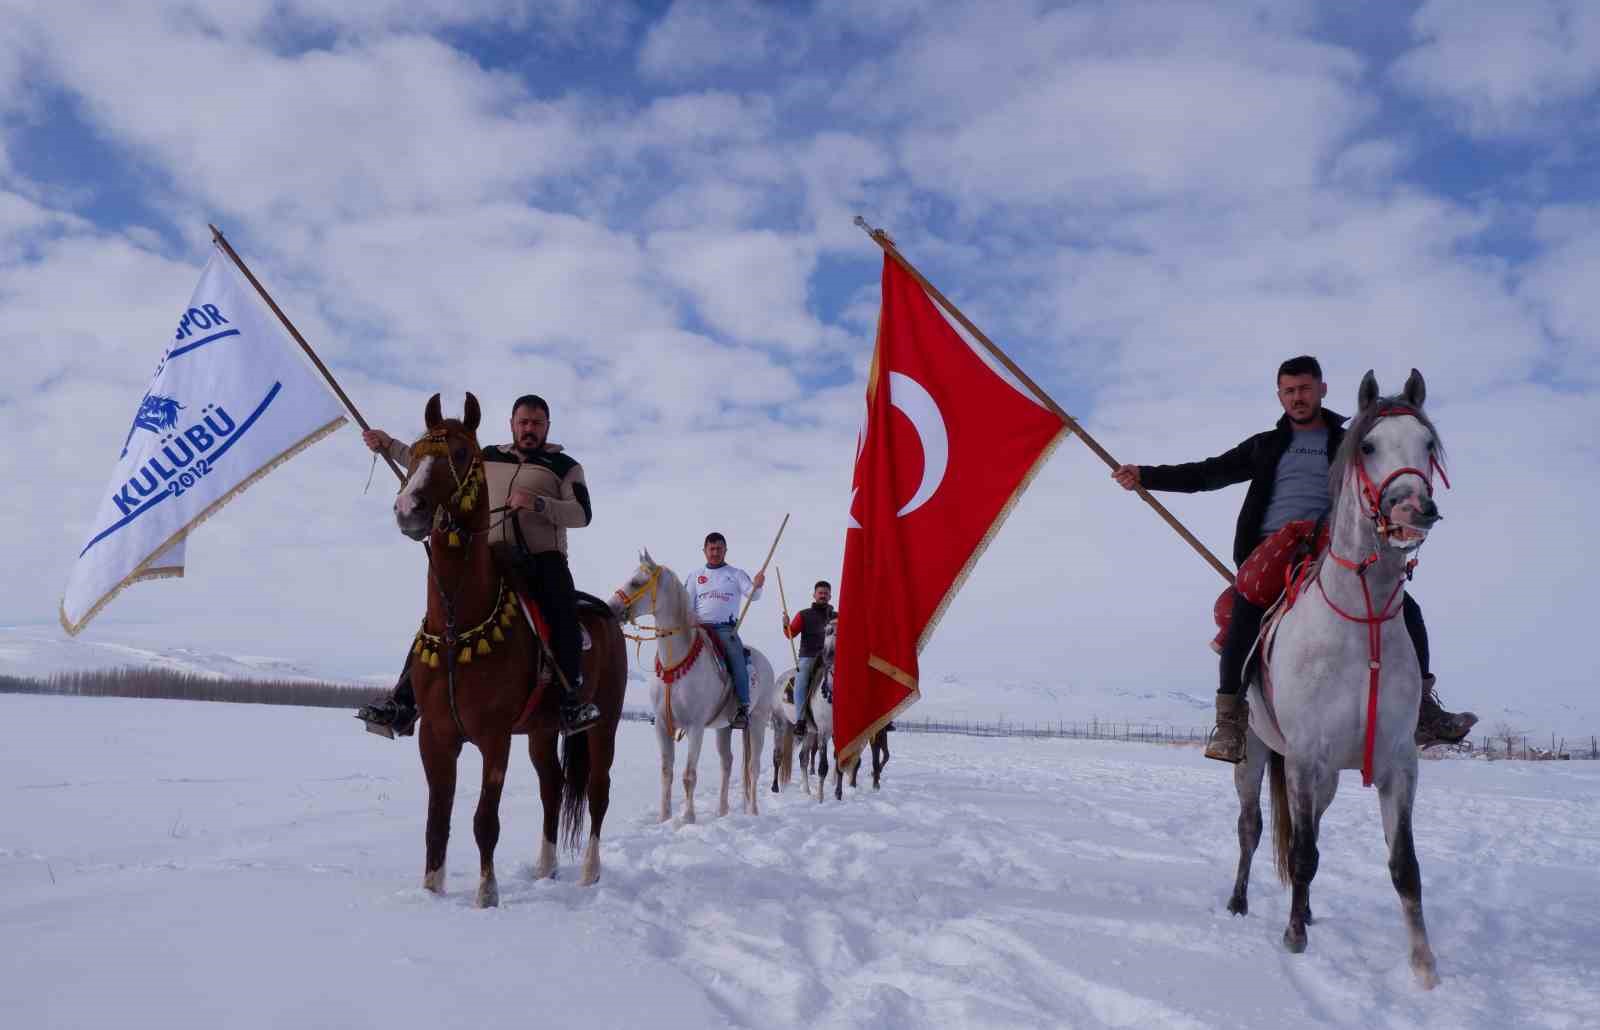 Erzurumda Kar Uzerinde Cirit Keyfi 0 Gdppuwyh